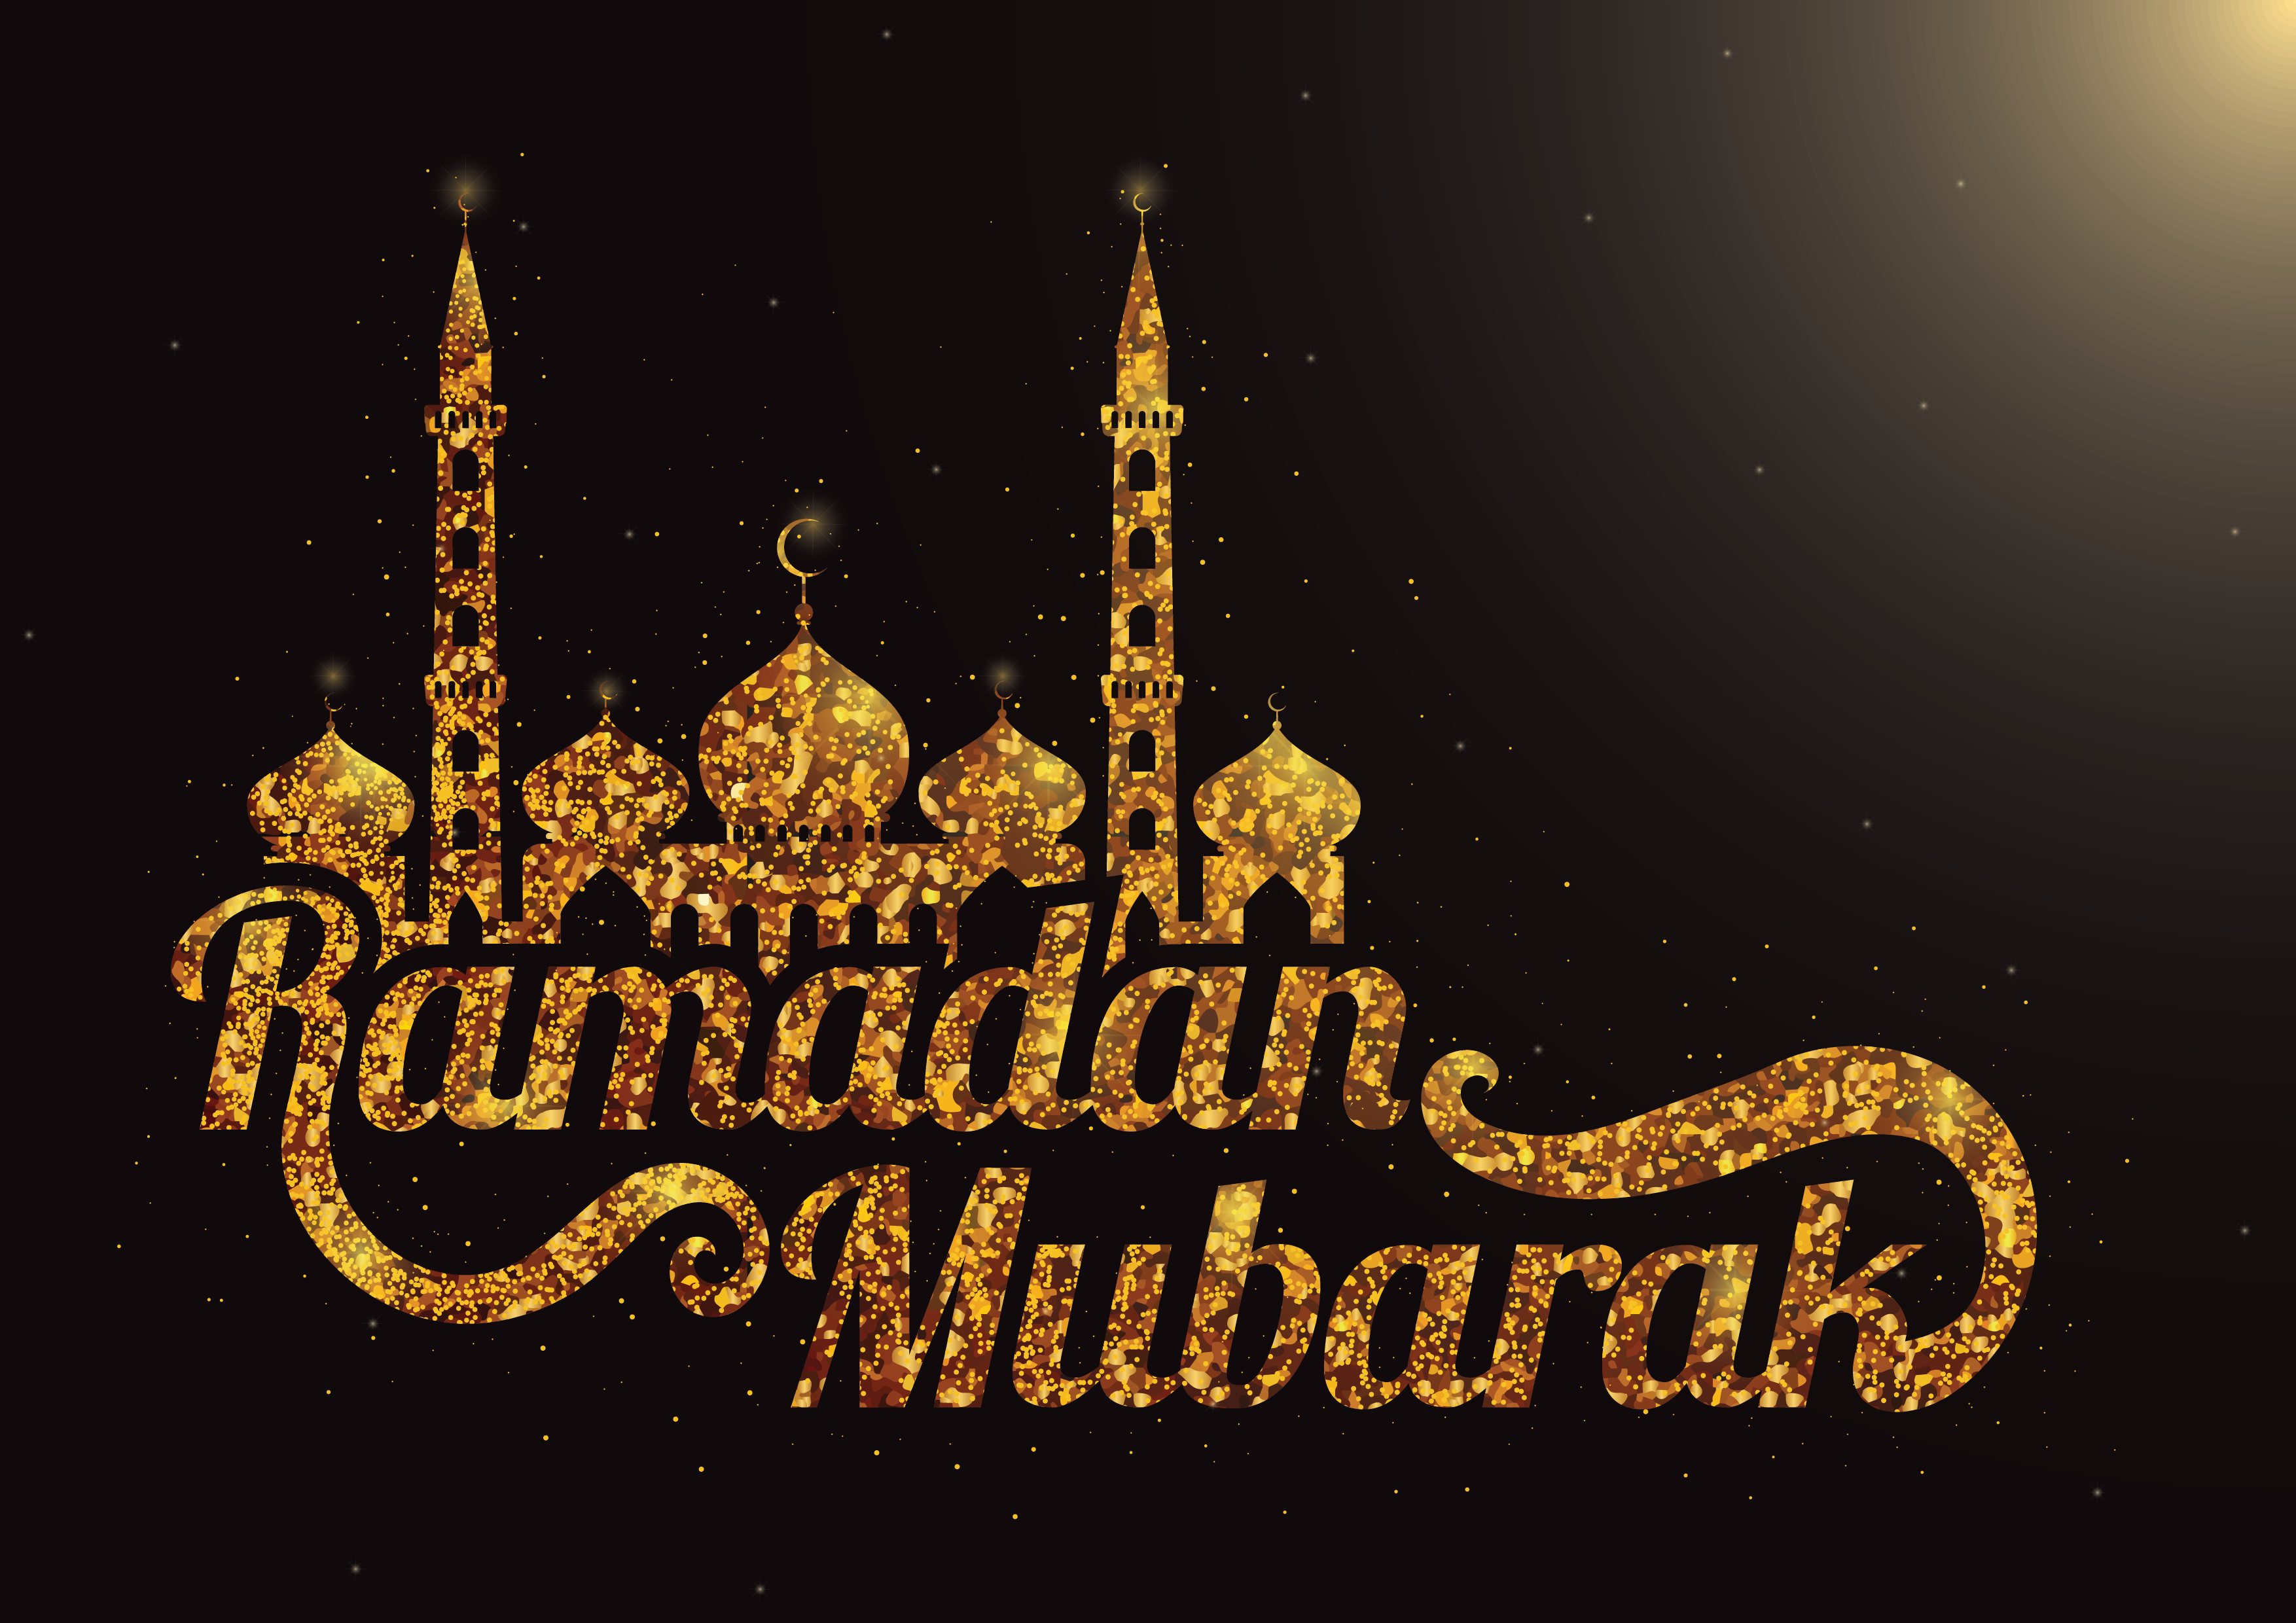 Ramadan Mubarak Picture